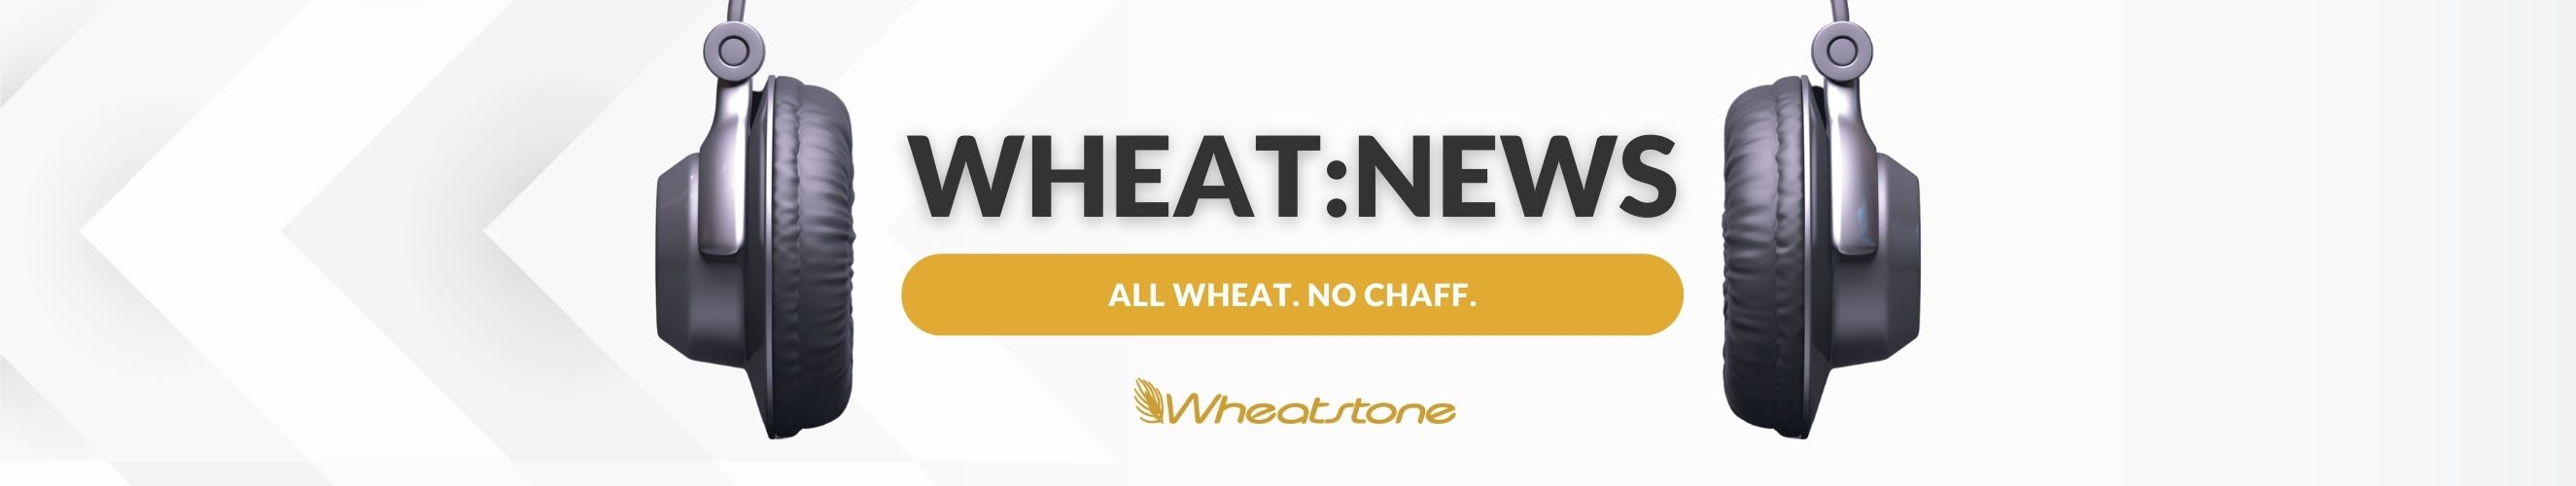 Wheat News Banner